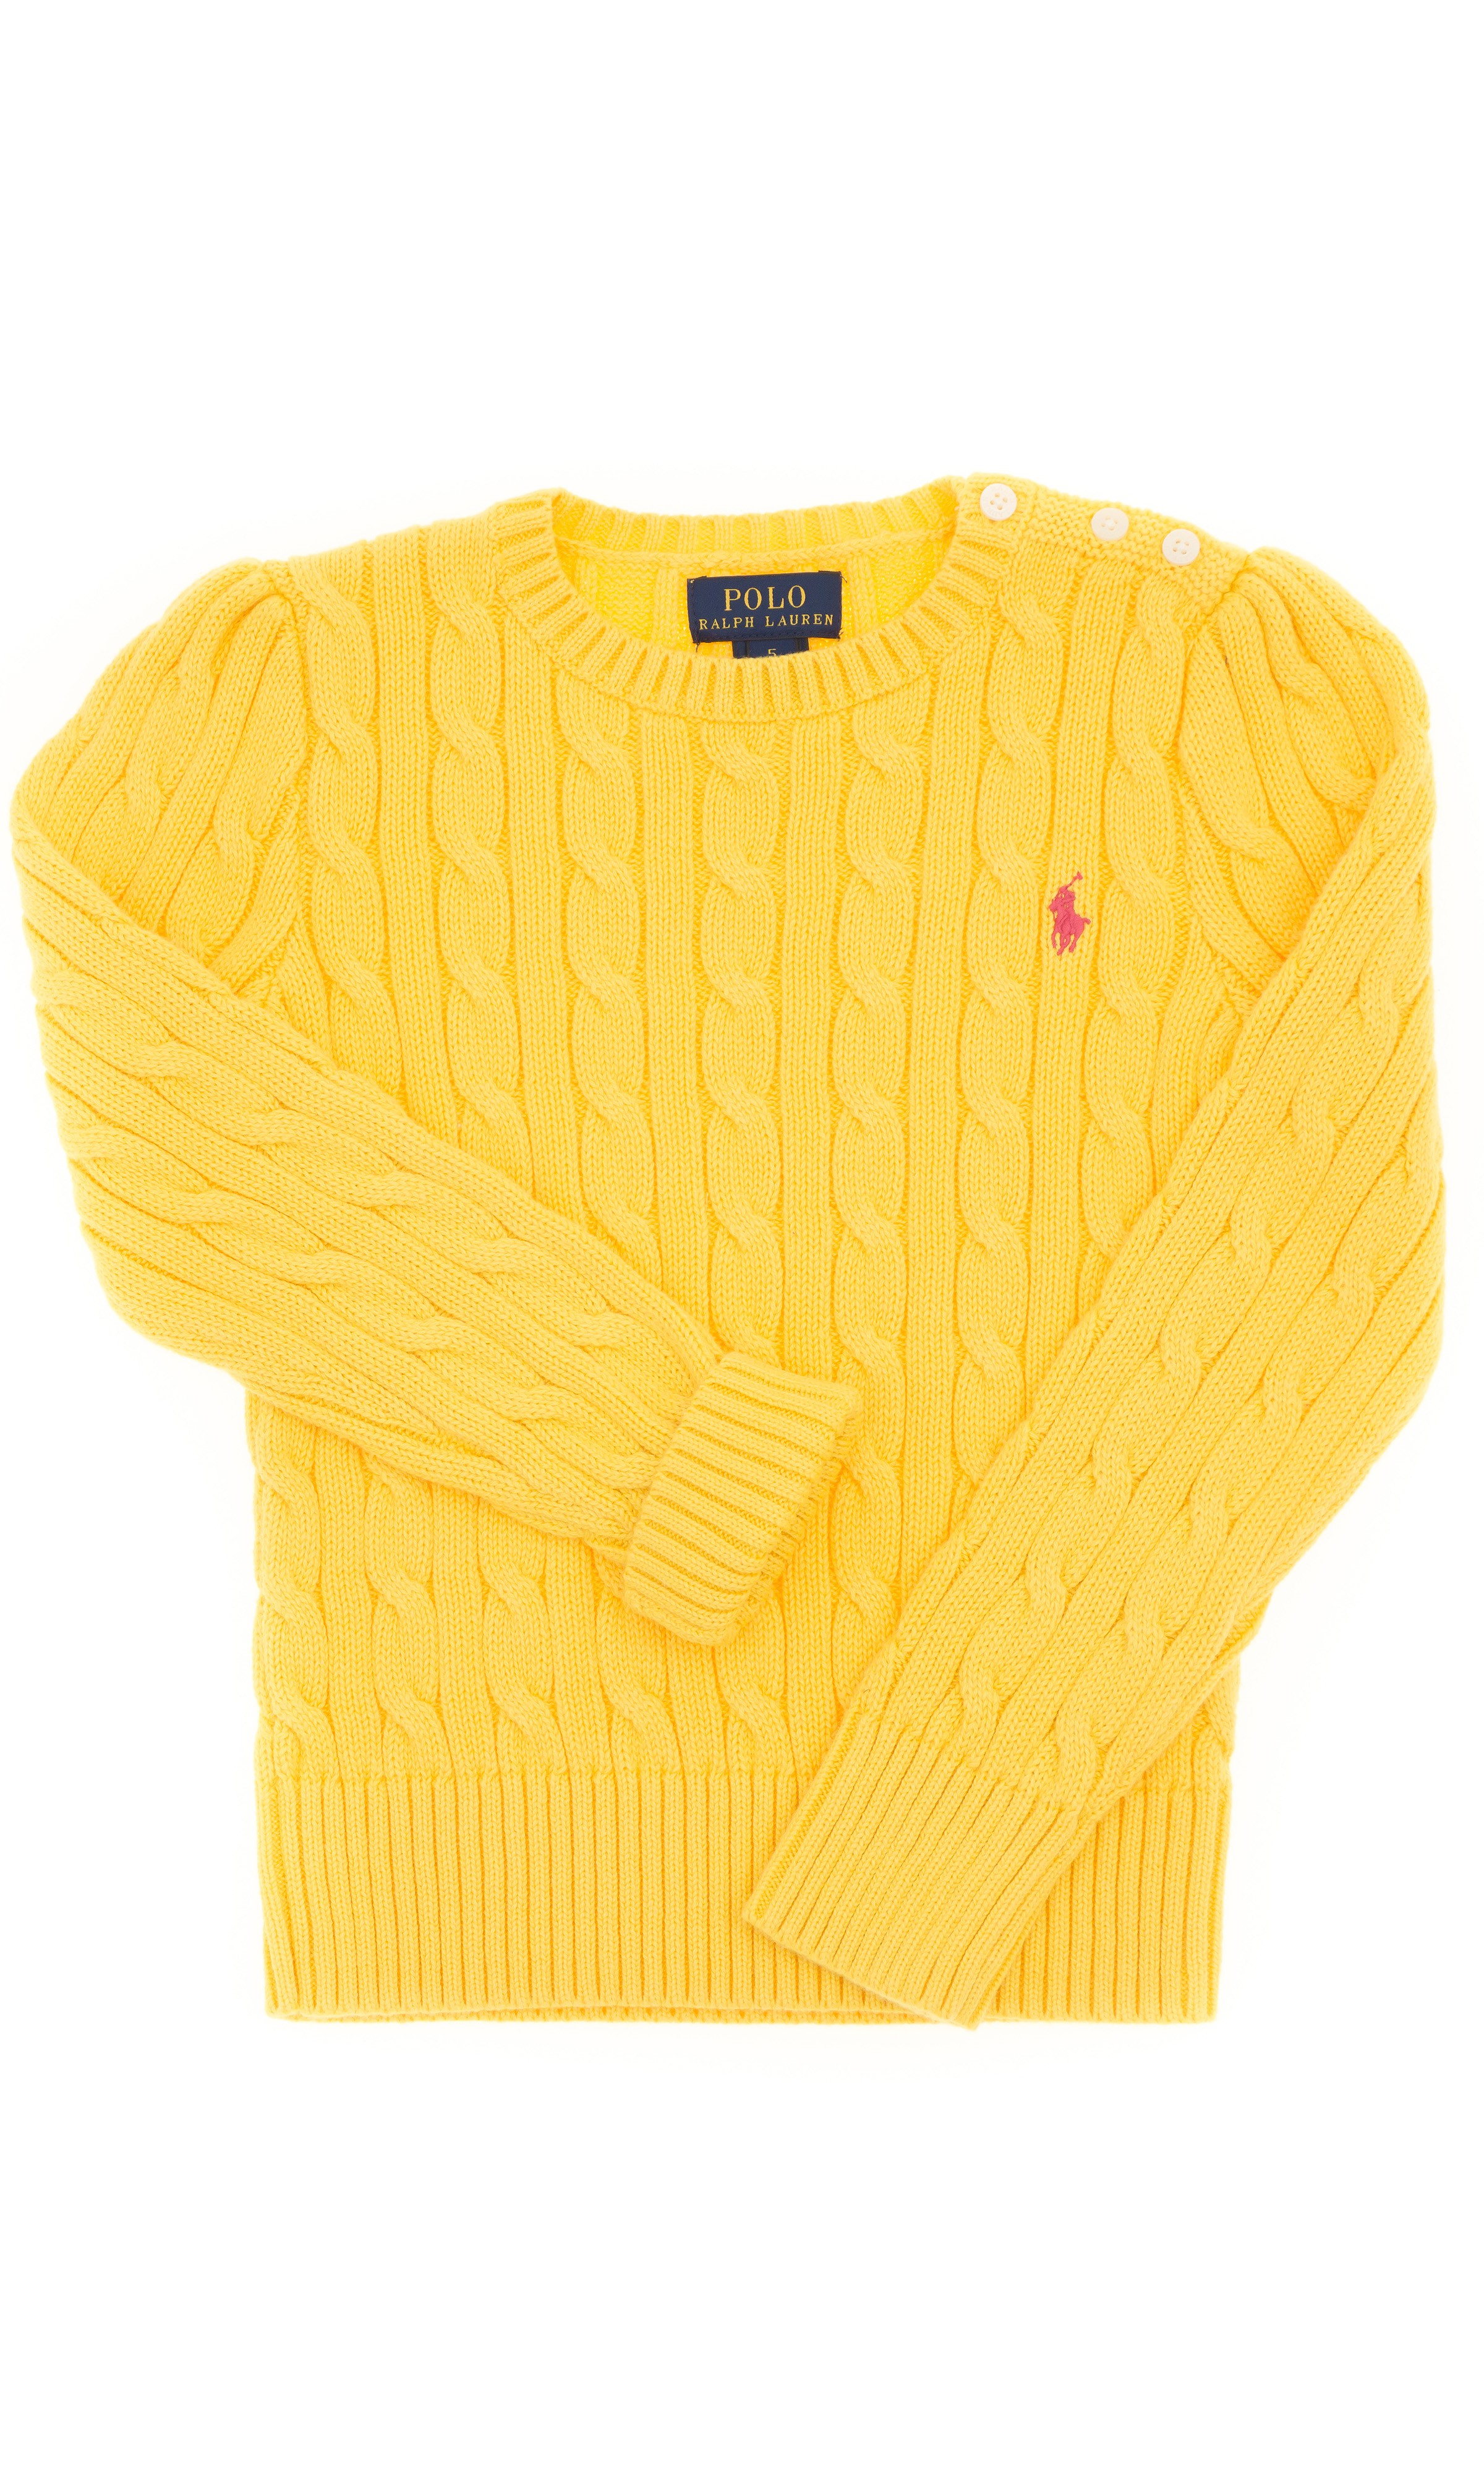 Yellow sweater, plait weave, Polo Ralph Lauren - Celebrity-Club